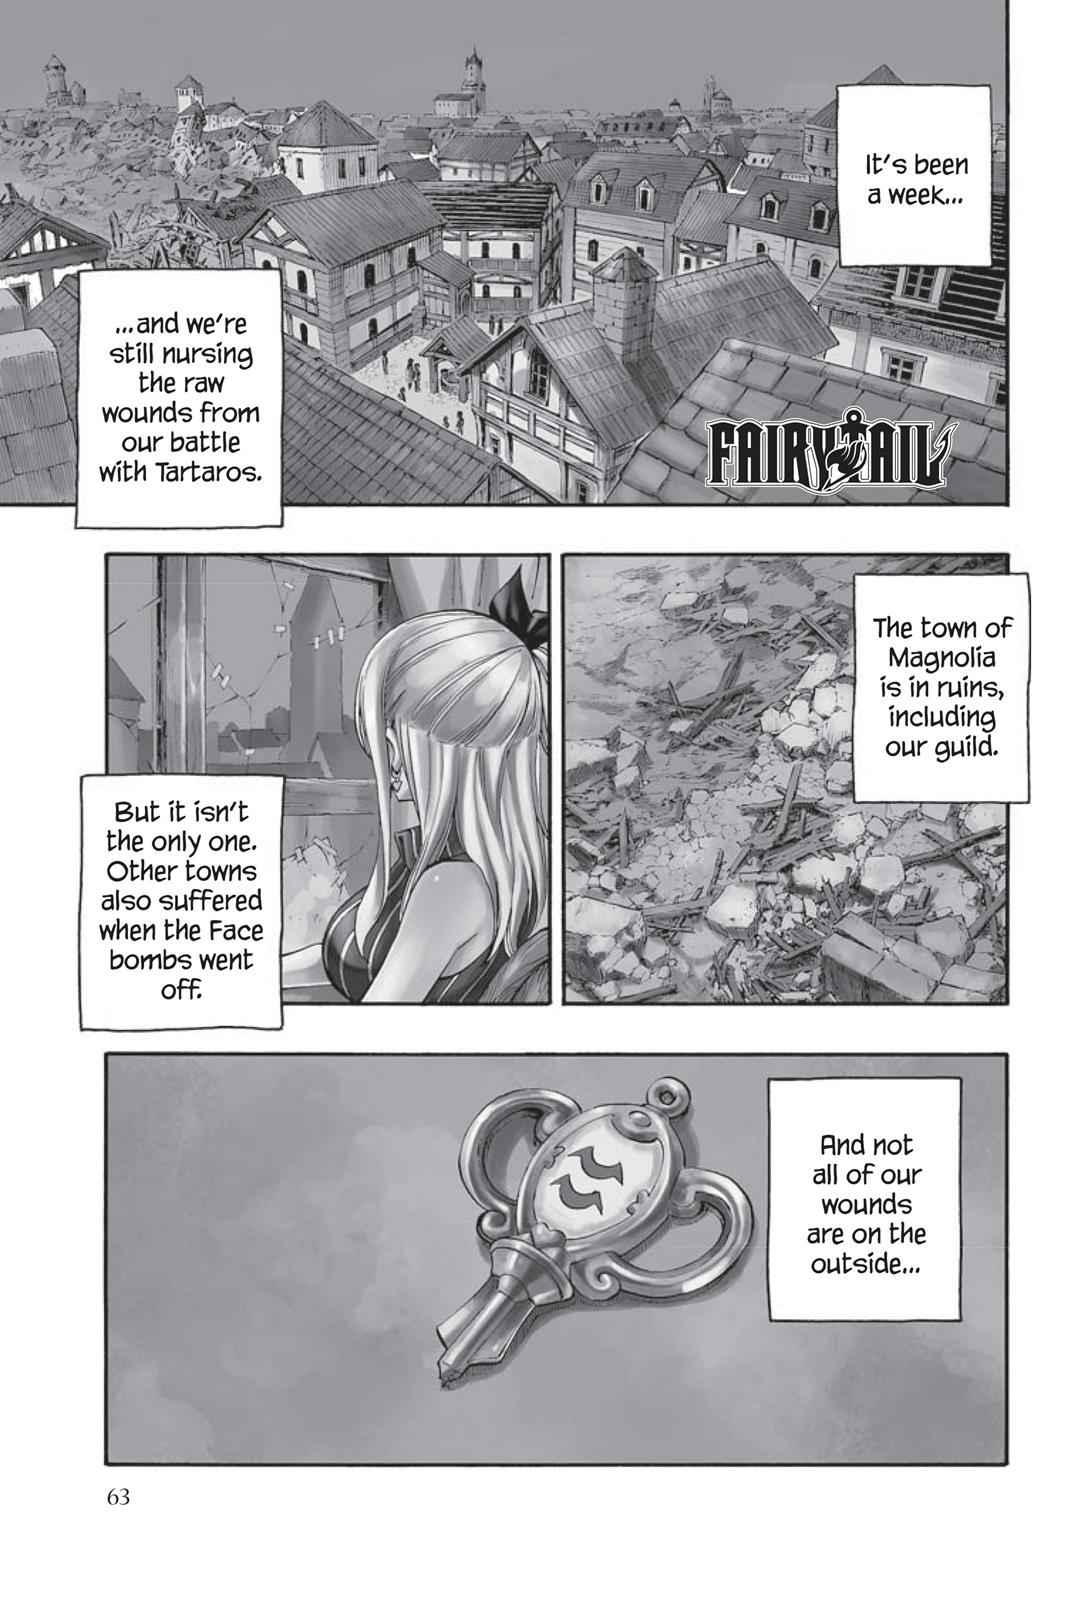 Fairy Tail Capítulo 416 - Manga Online